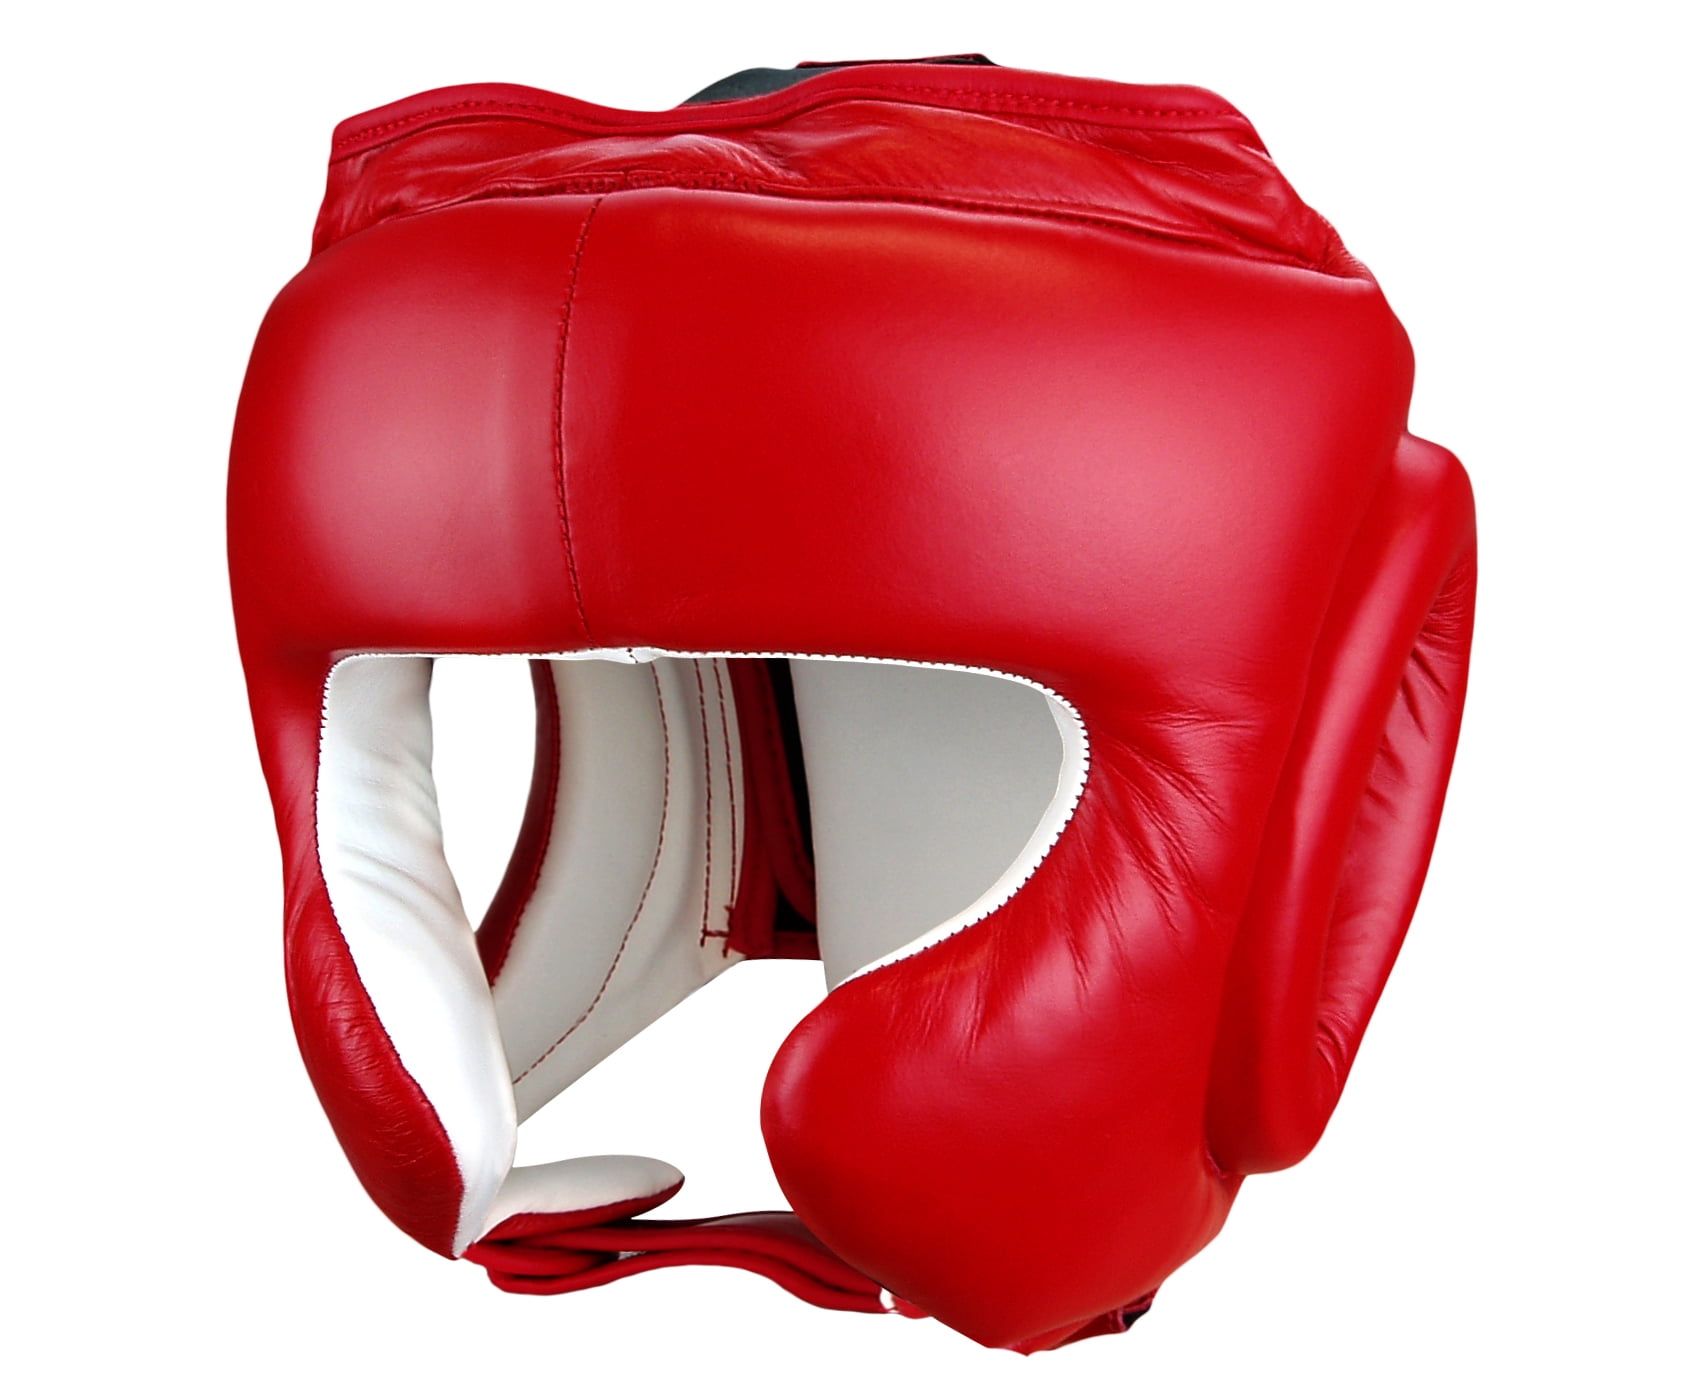 Pro Box Original Tan Boxing Head Guard MMA Sparring HeadGuard Full Face Headgear 